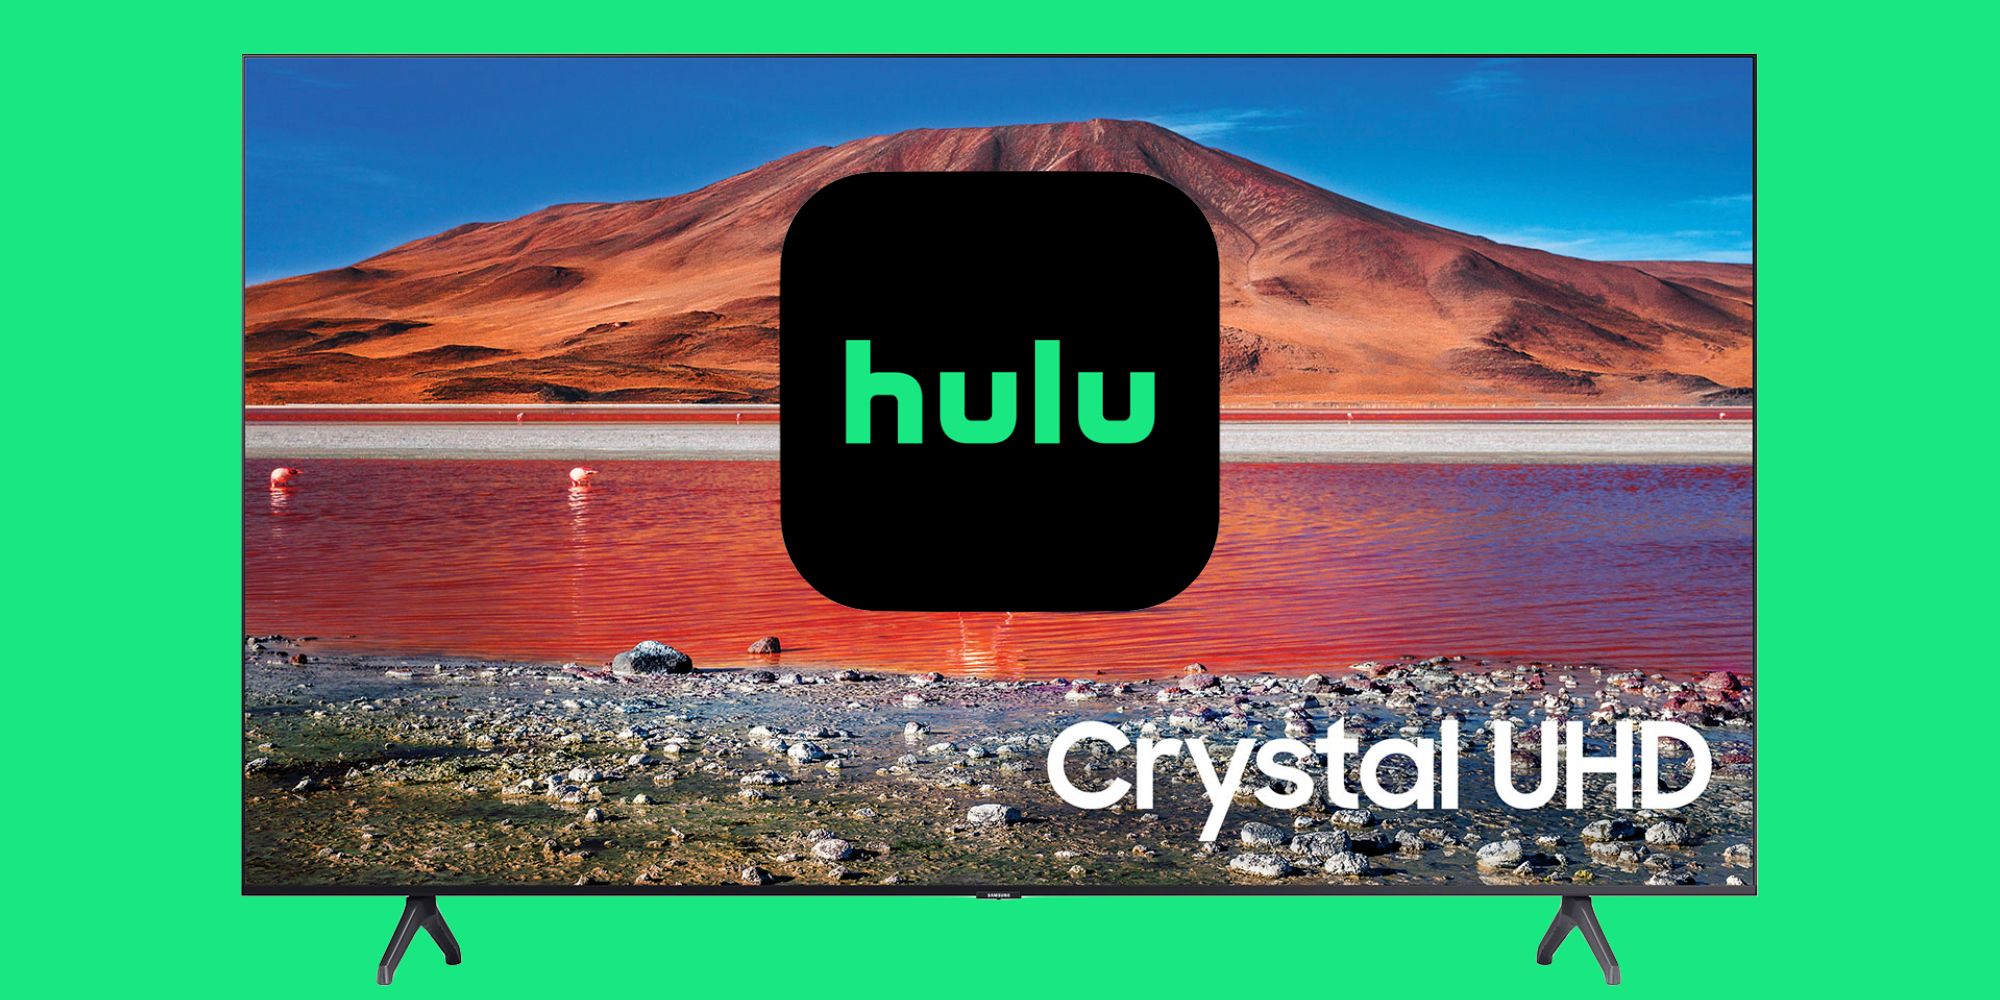 Hulu app icon on a Samsung smart TV